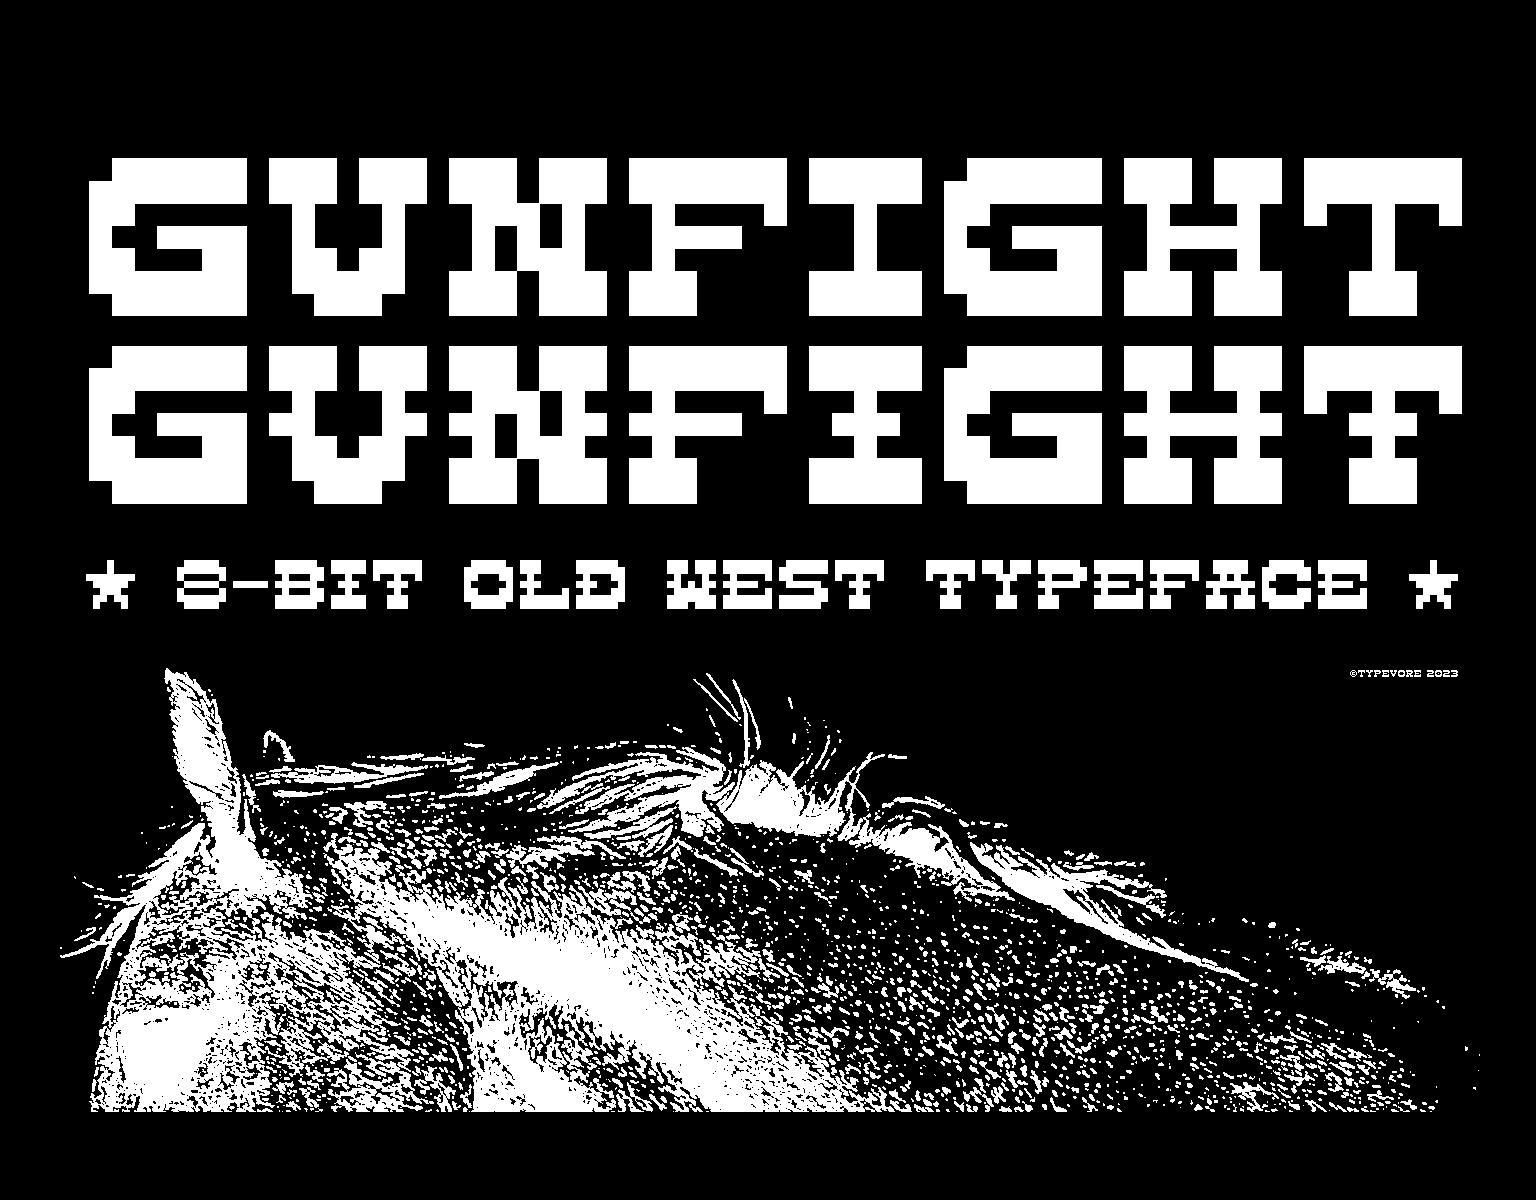 GunFight 8-Bit